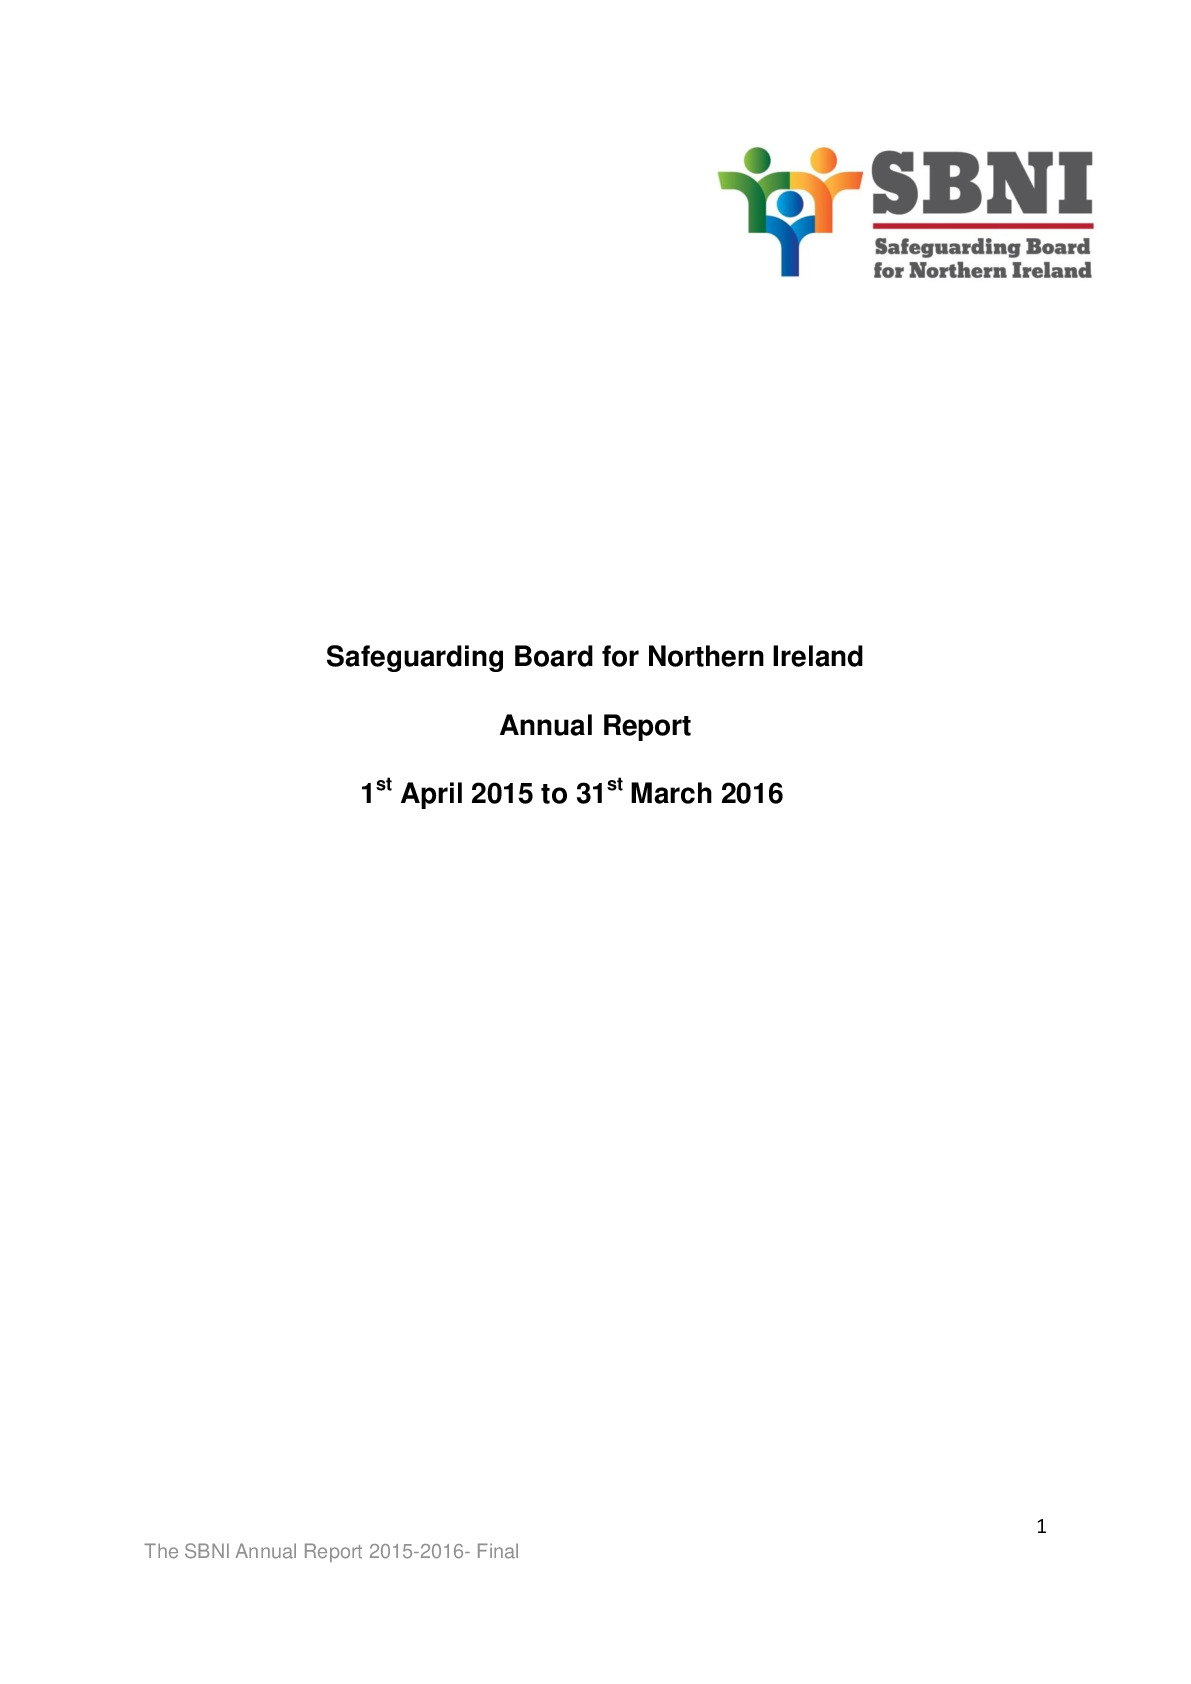 01.02.17-SBNI Annual Report 2015 - 2016 -Final_0